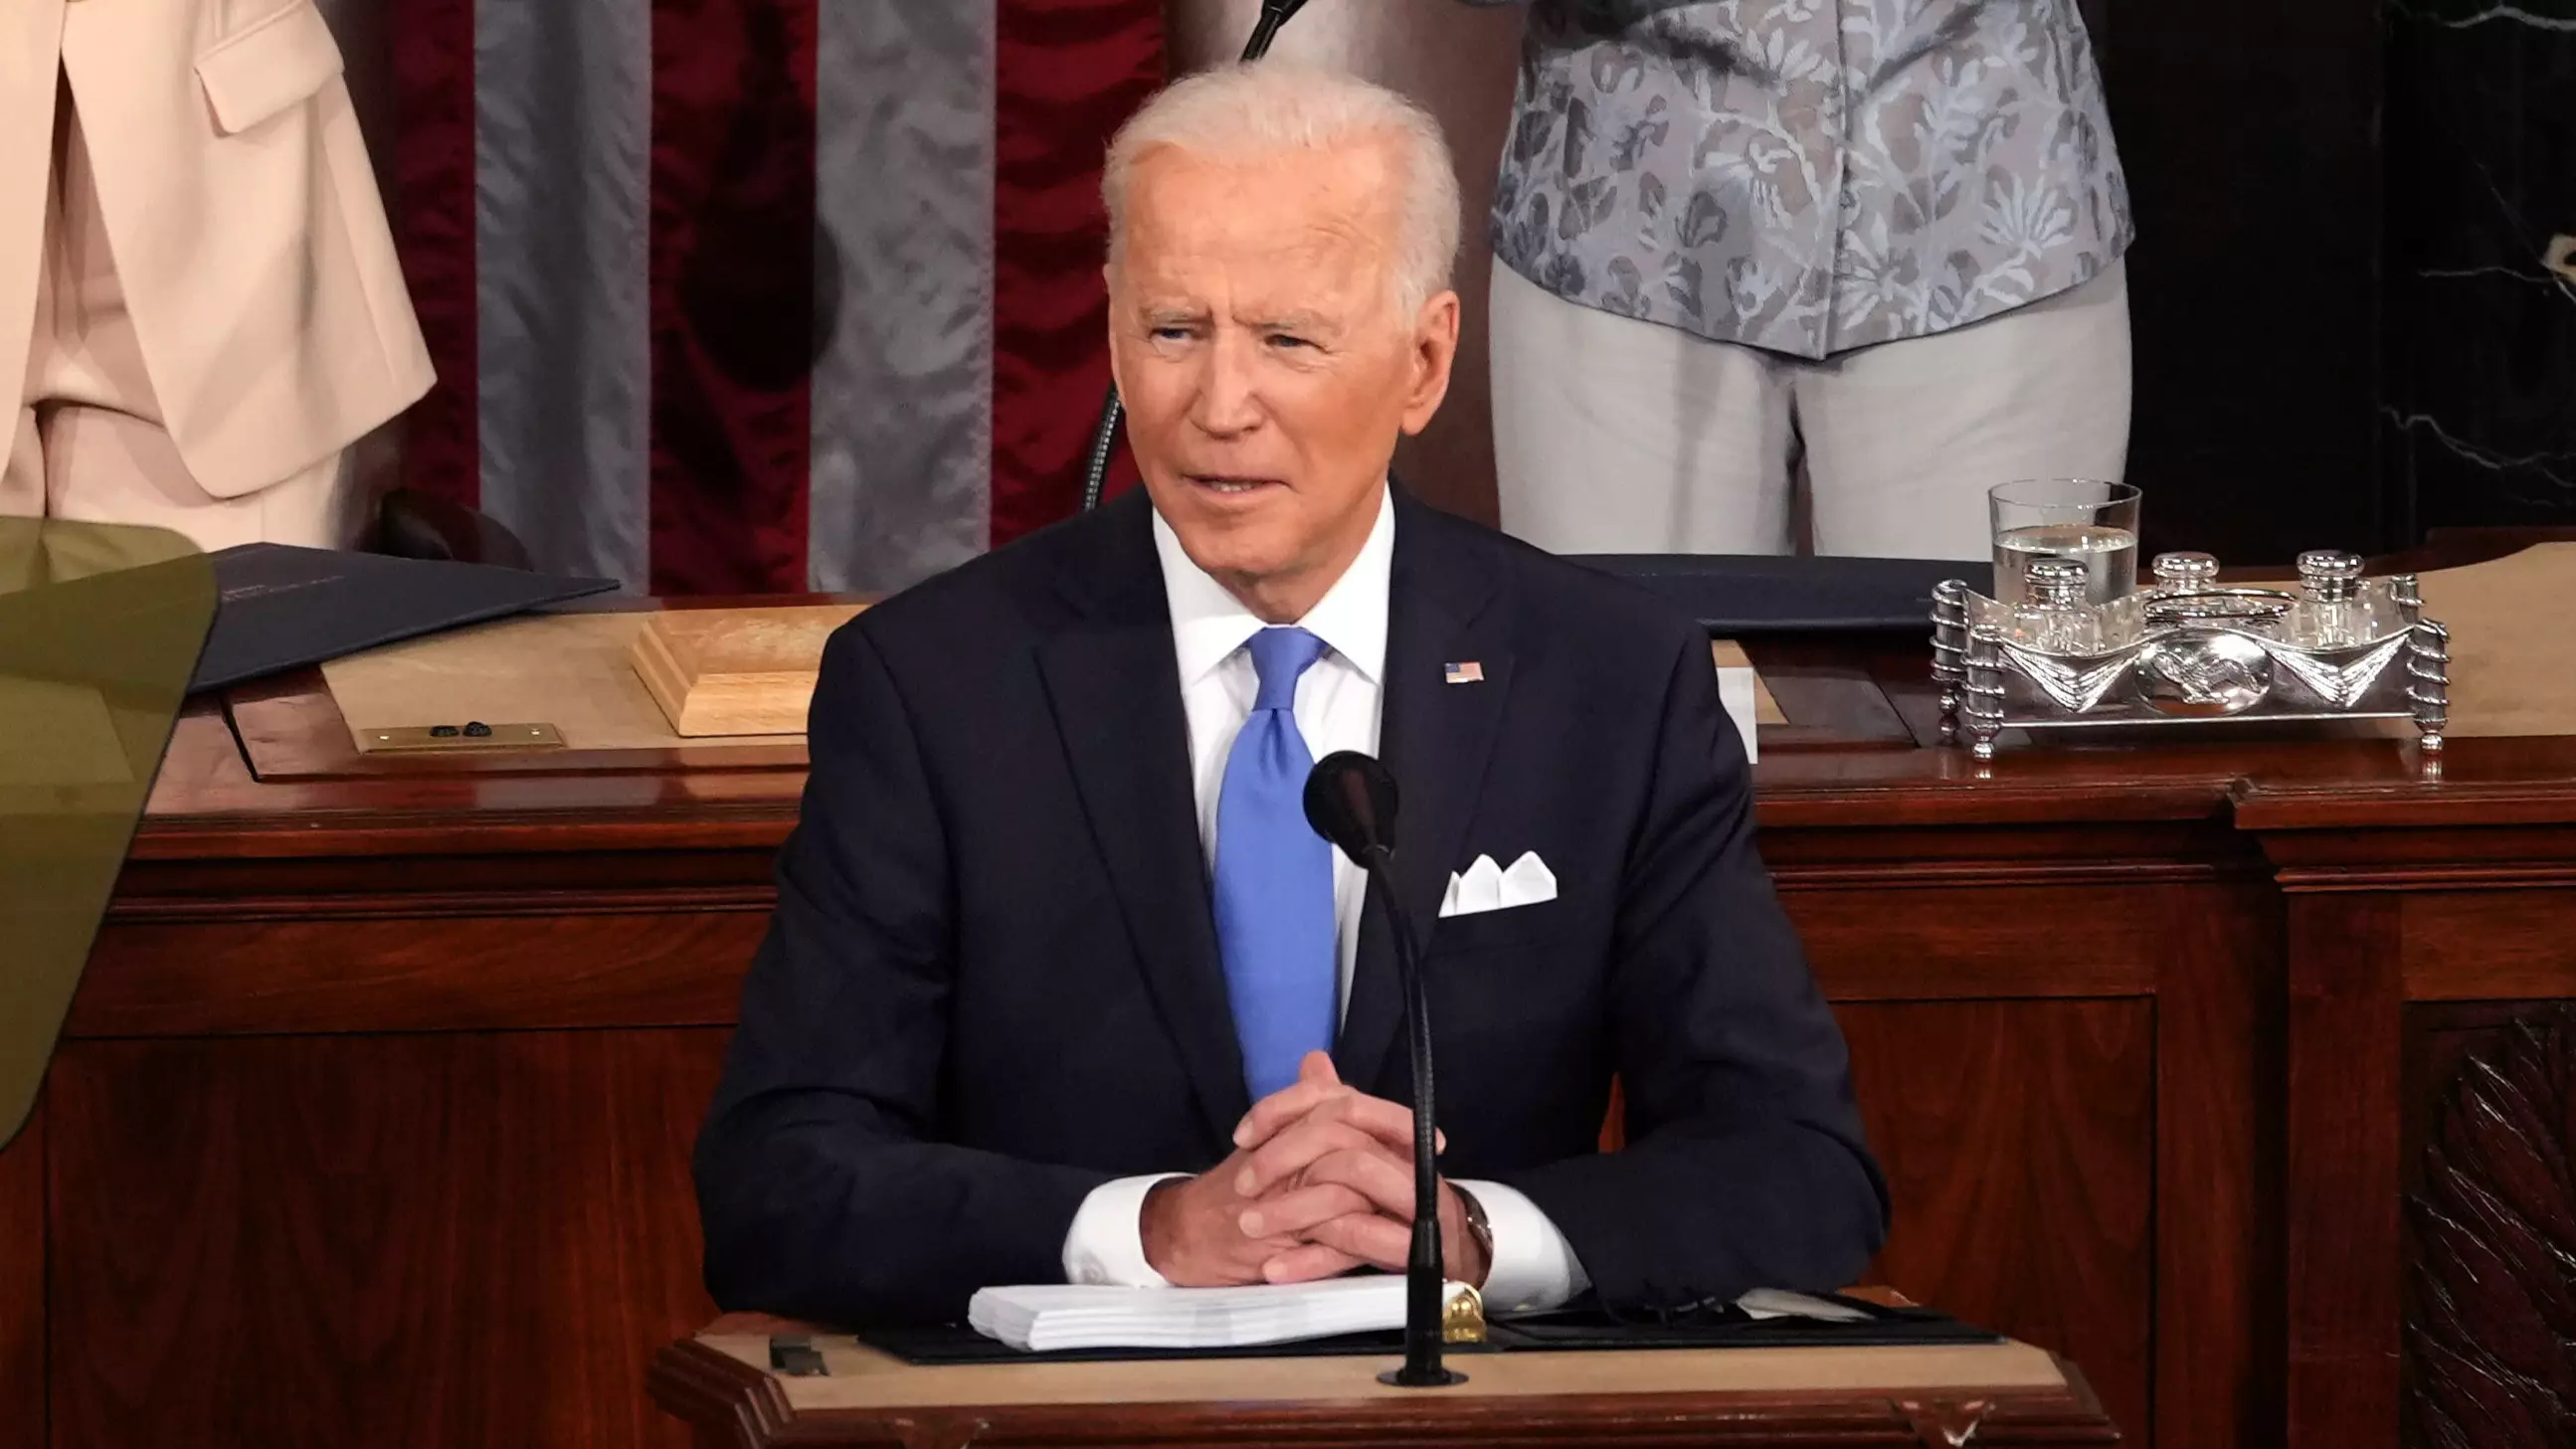 Joe Biden Tells Transgender Americans 'The President Has Your Back'